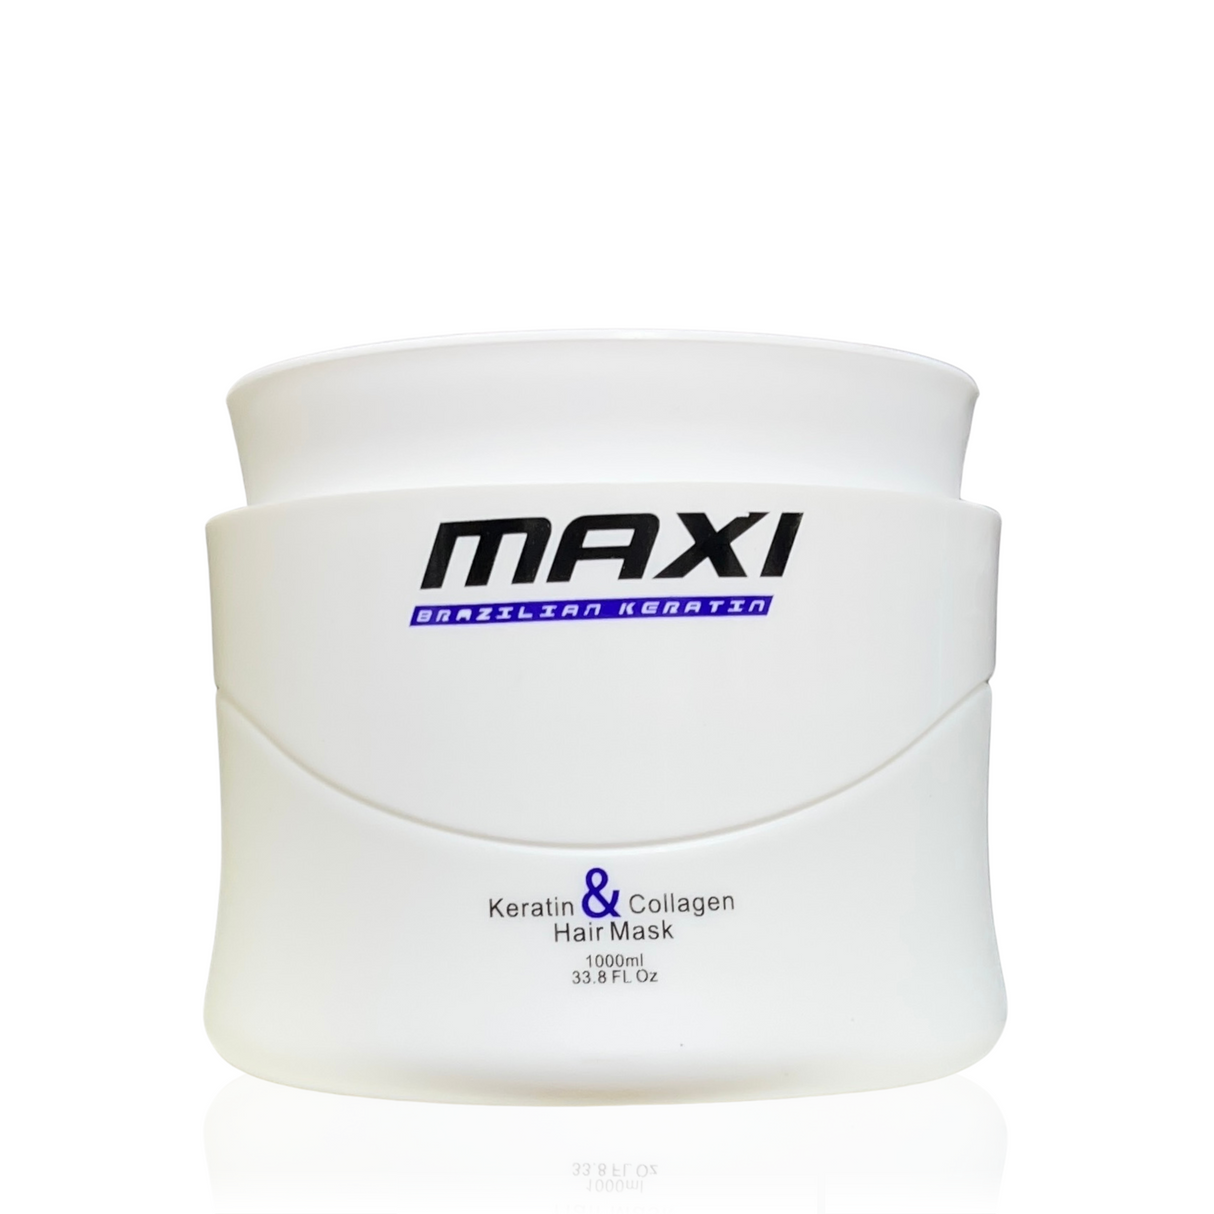 Maxi Keratin&Collagen Hair Mask - 1000ml